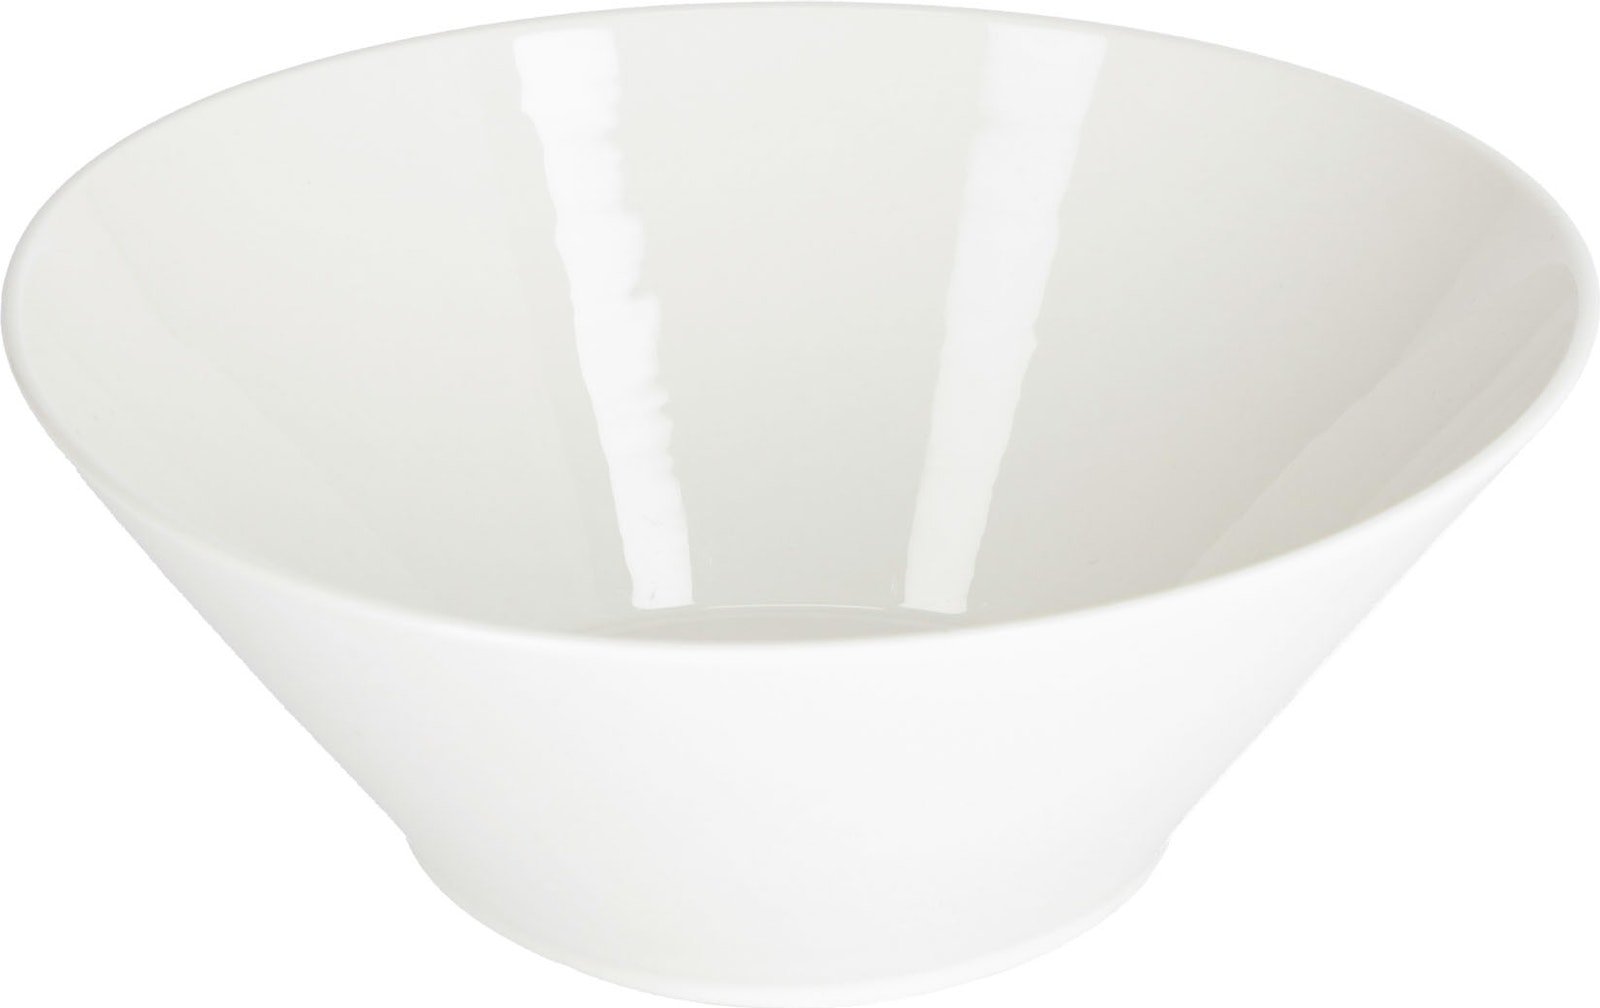 6: Pierina, Skål, keramik by Kave Home (H: 9 cm. B: 24.5 cm. L: 24.5 cm., Hvid)